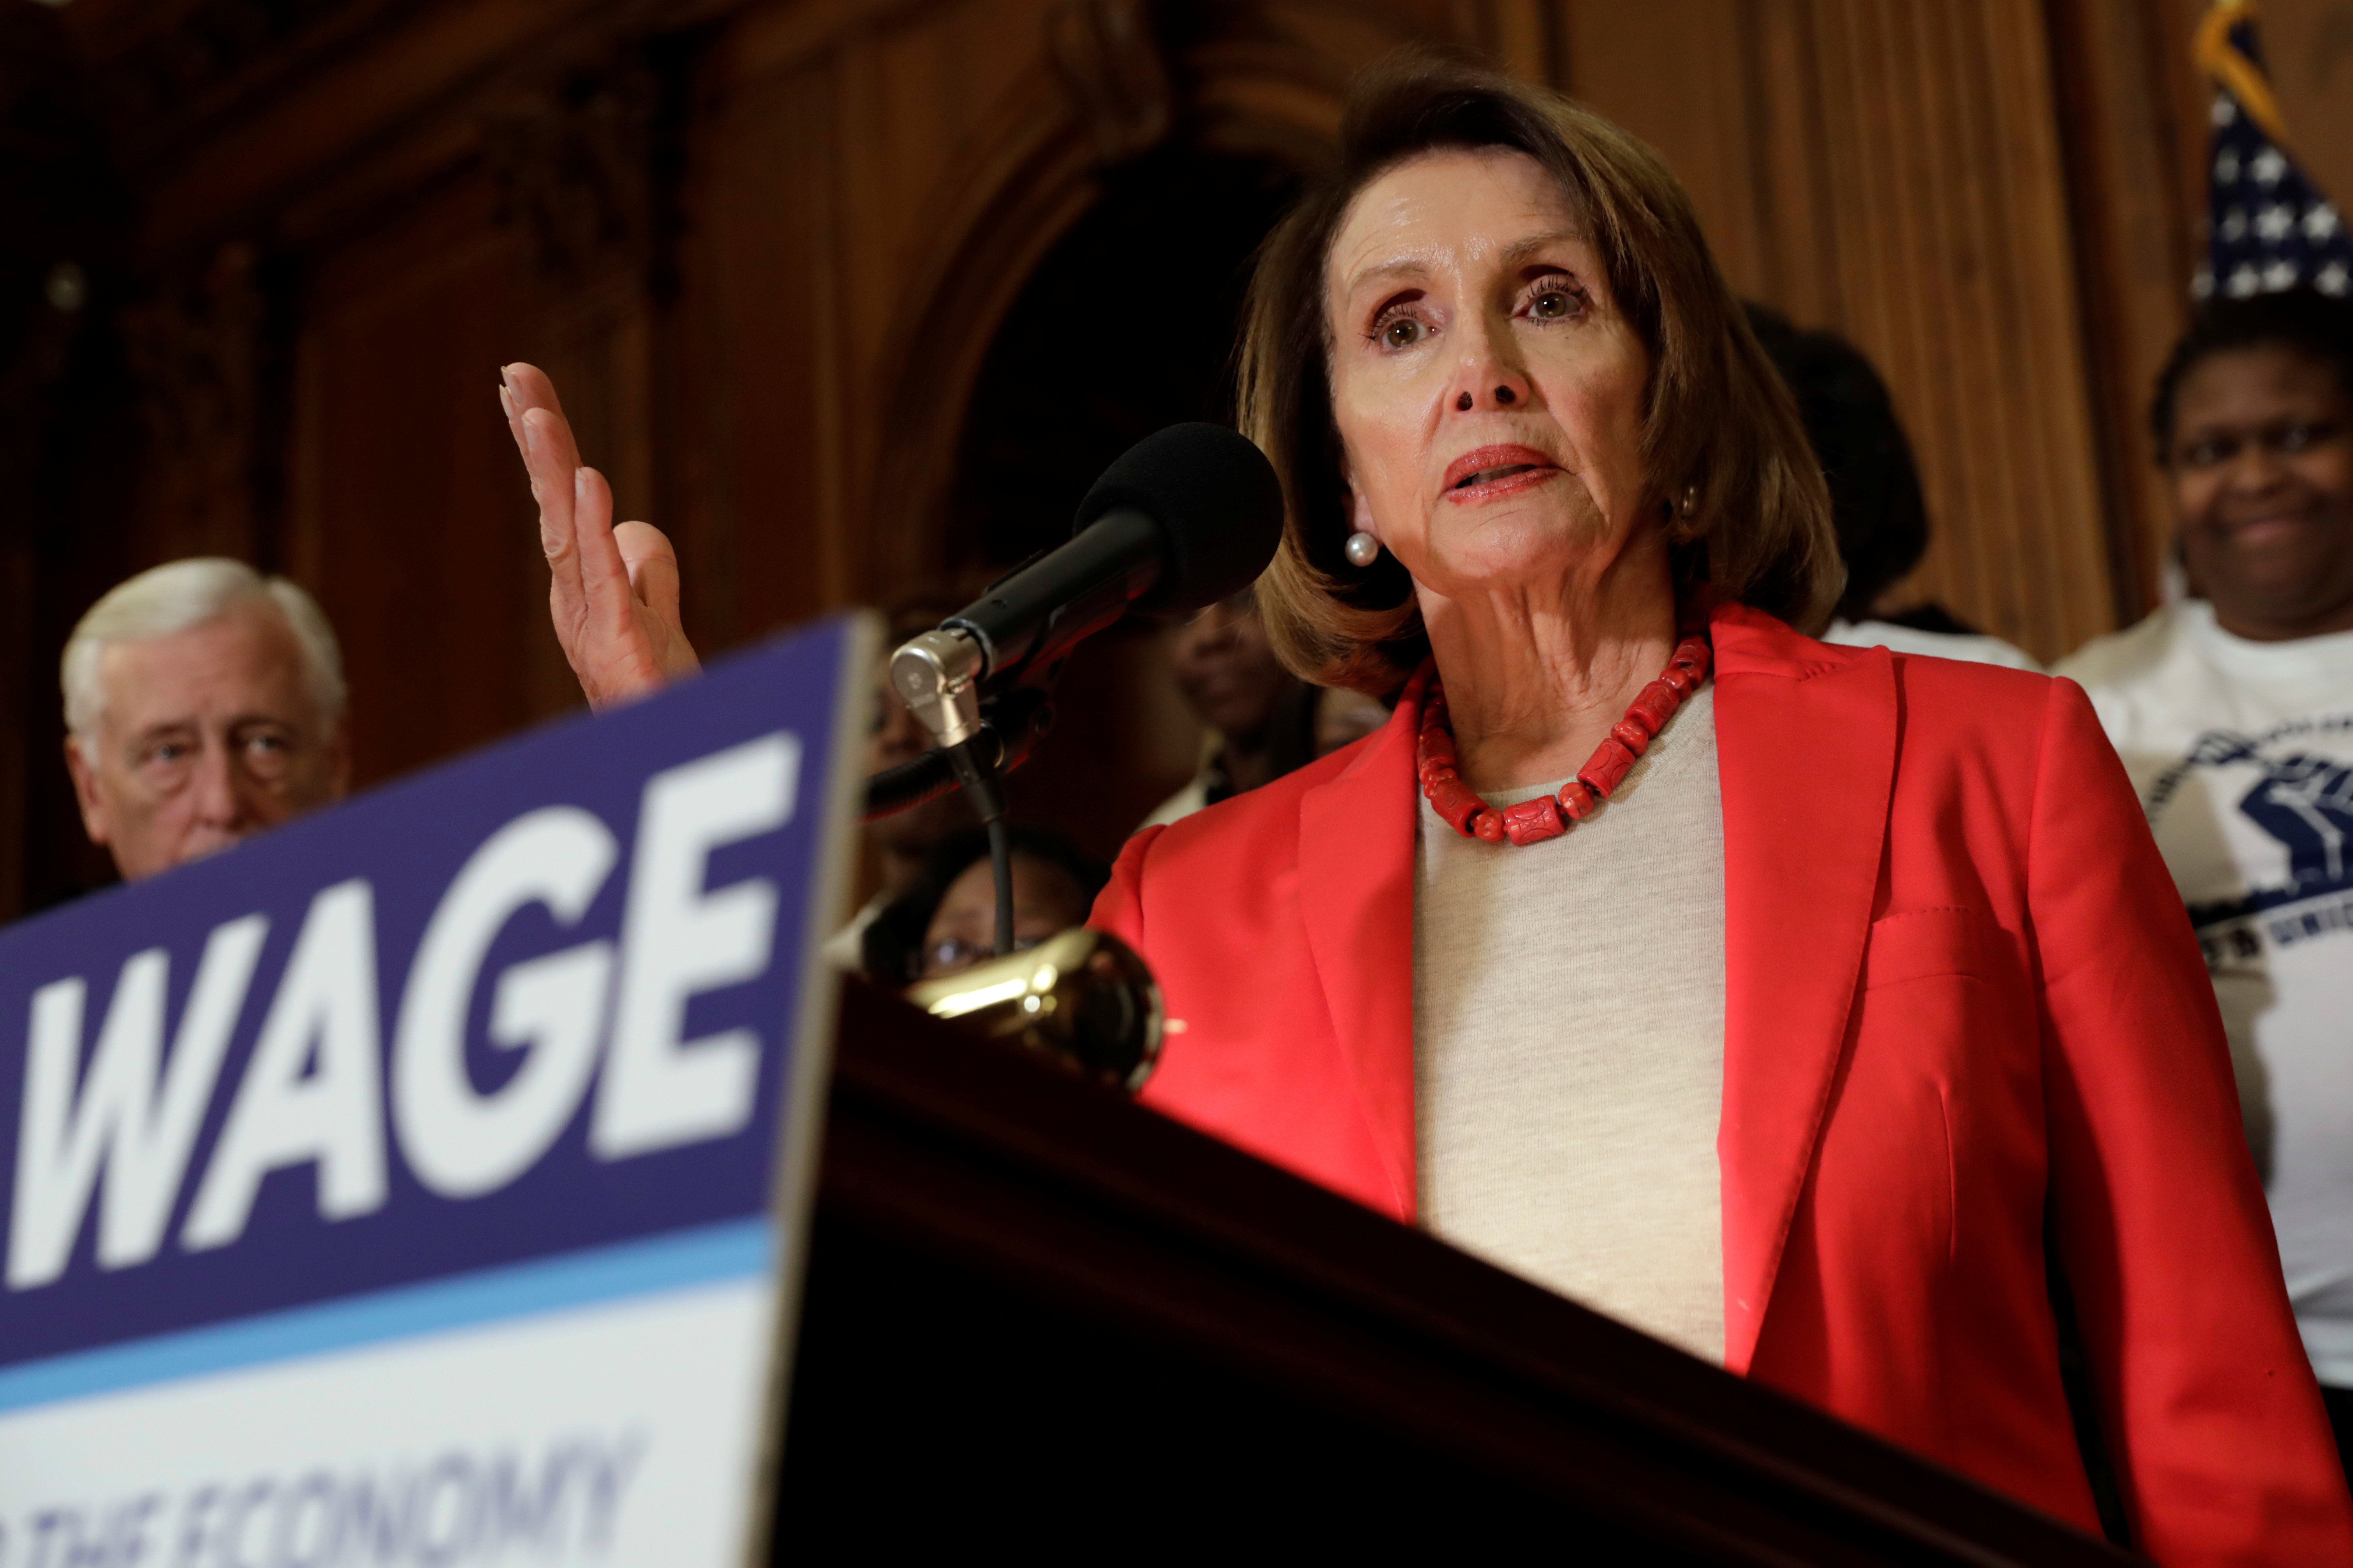 U.S. House Speaker Nancy Pelosi (D-CA) speaks during a news conference on "Raise the Wage Act" legislation on Capitol in Washington, U.S., January 16, 2019. REUTERS/Yuri Gripas